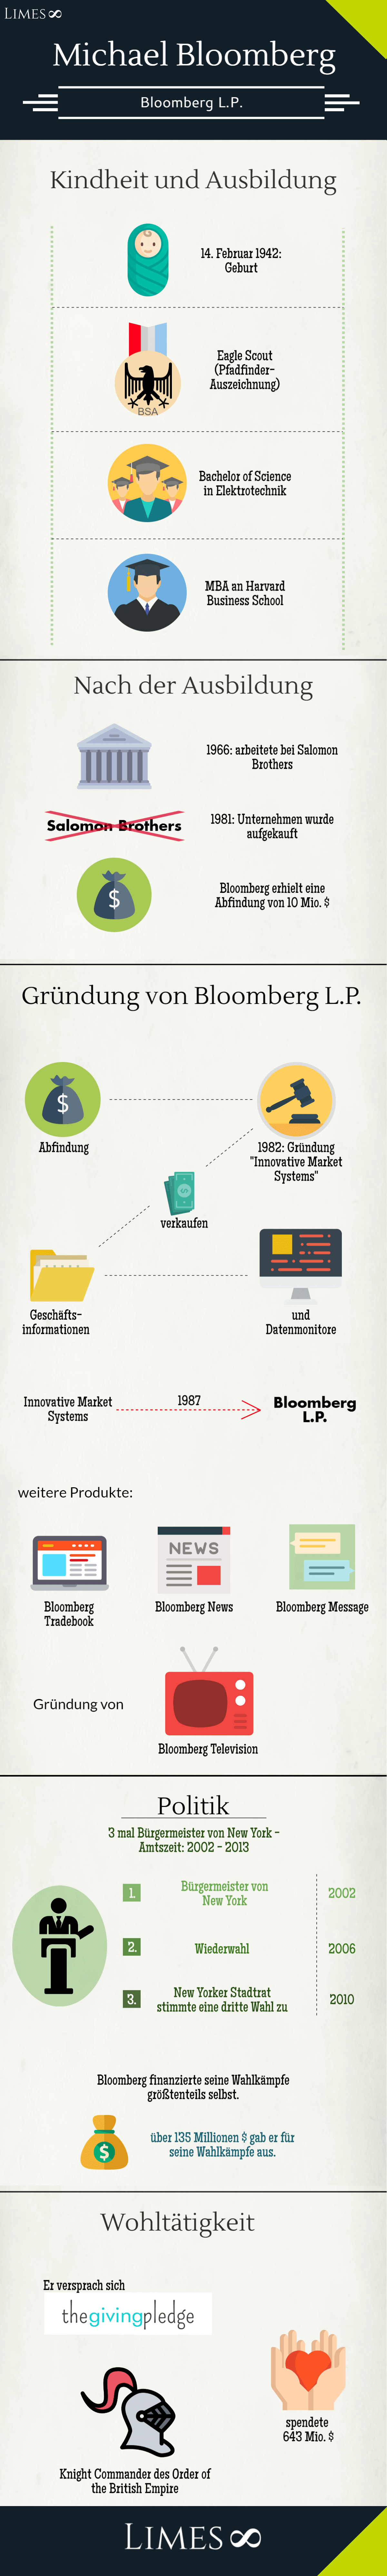 Infografik über Michael Bloomberg